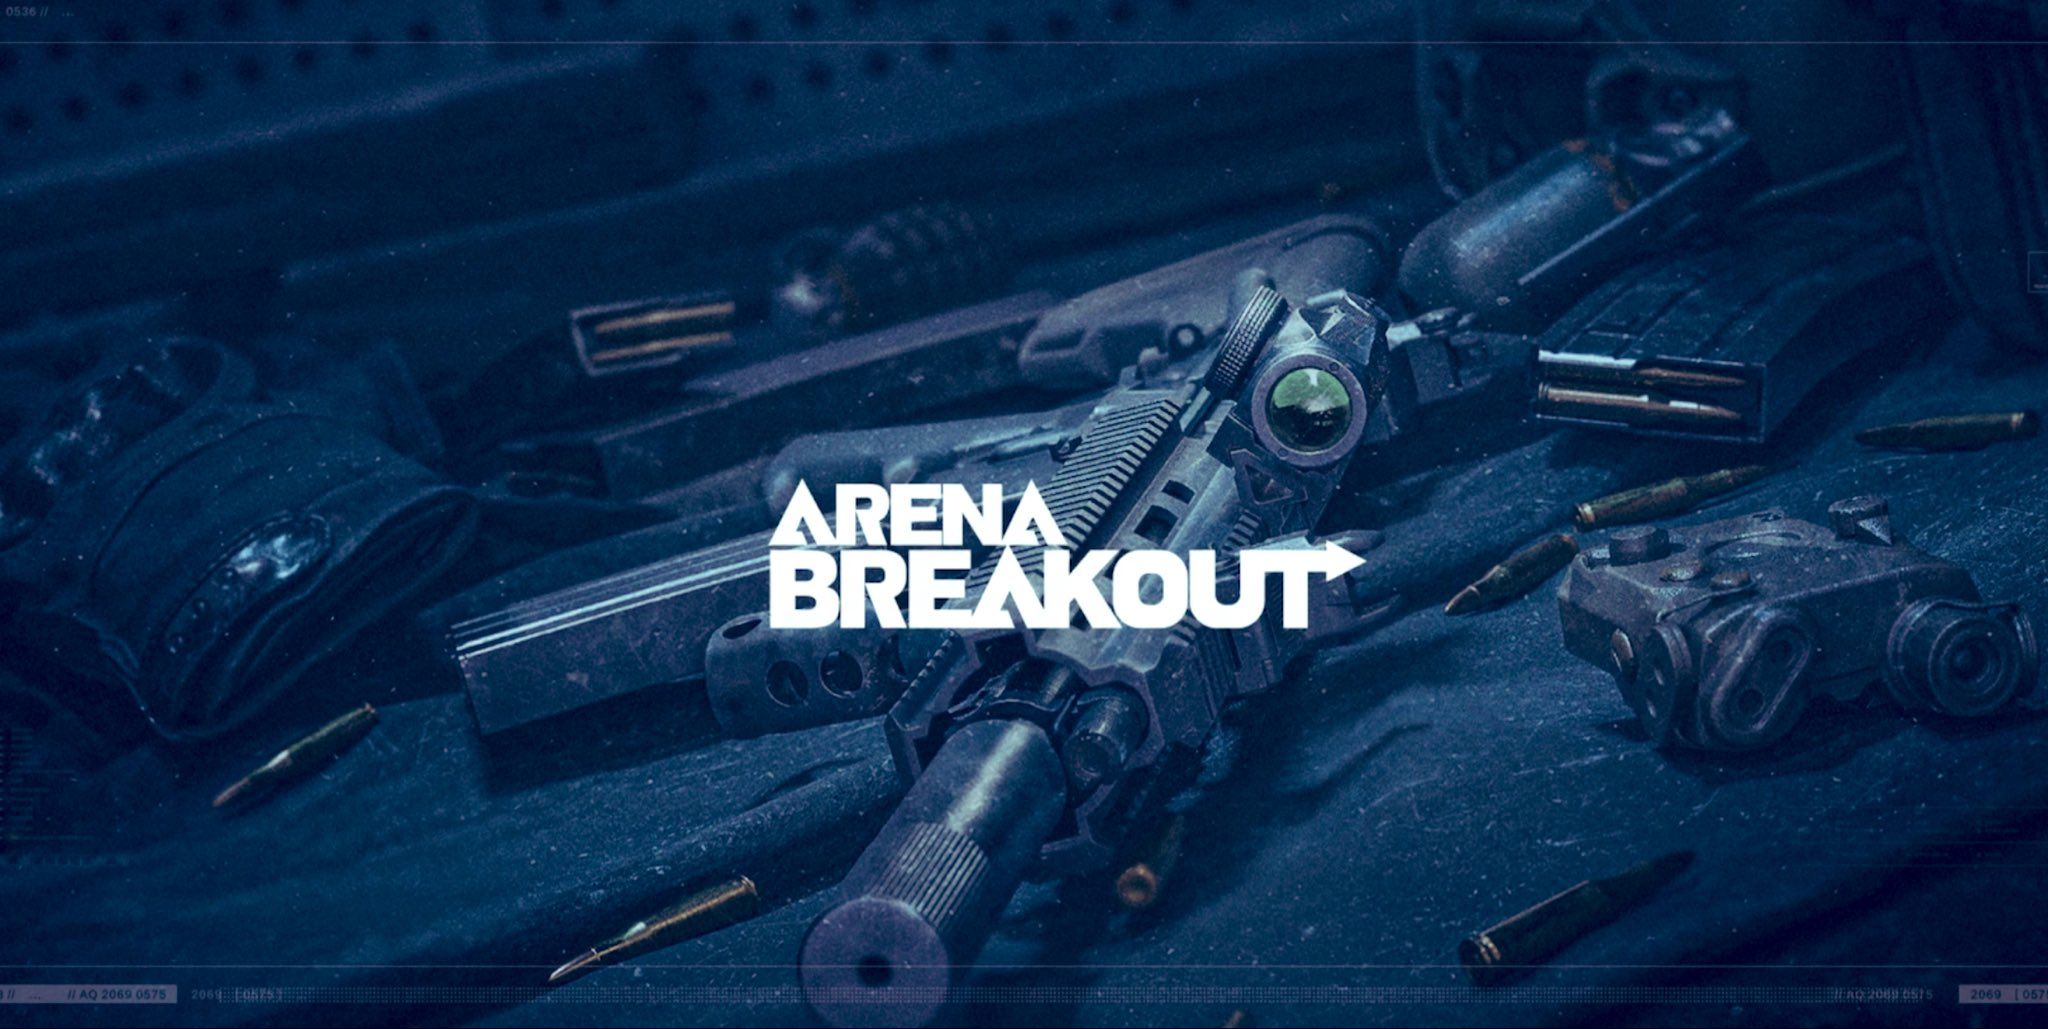 Игра на андроид arena breakout. Arena Breakout. Arena Breakout обои. Arena vrecaut. Arena Breakout пистолеты.